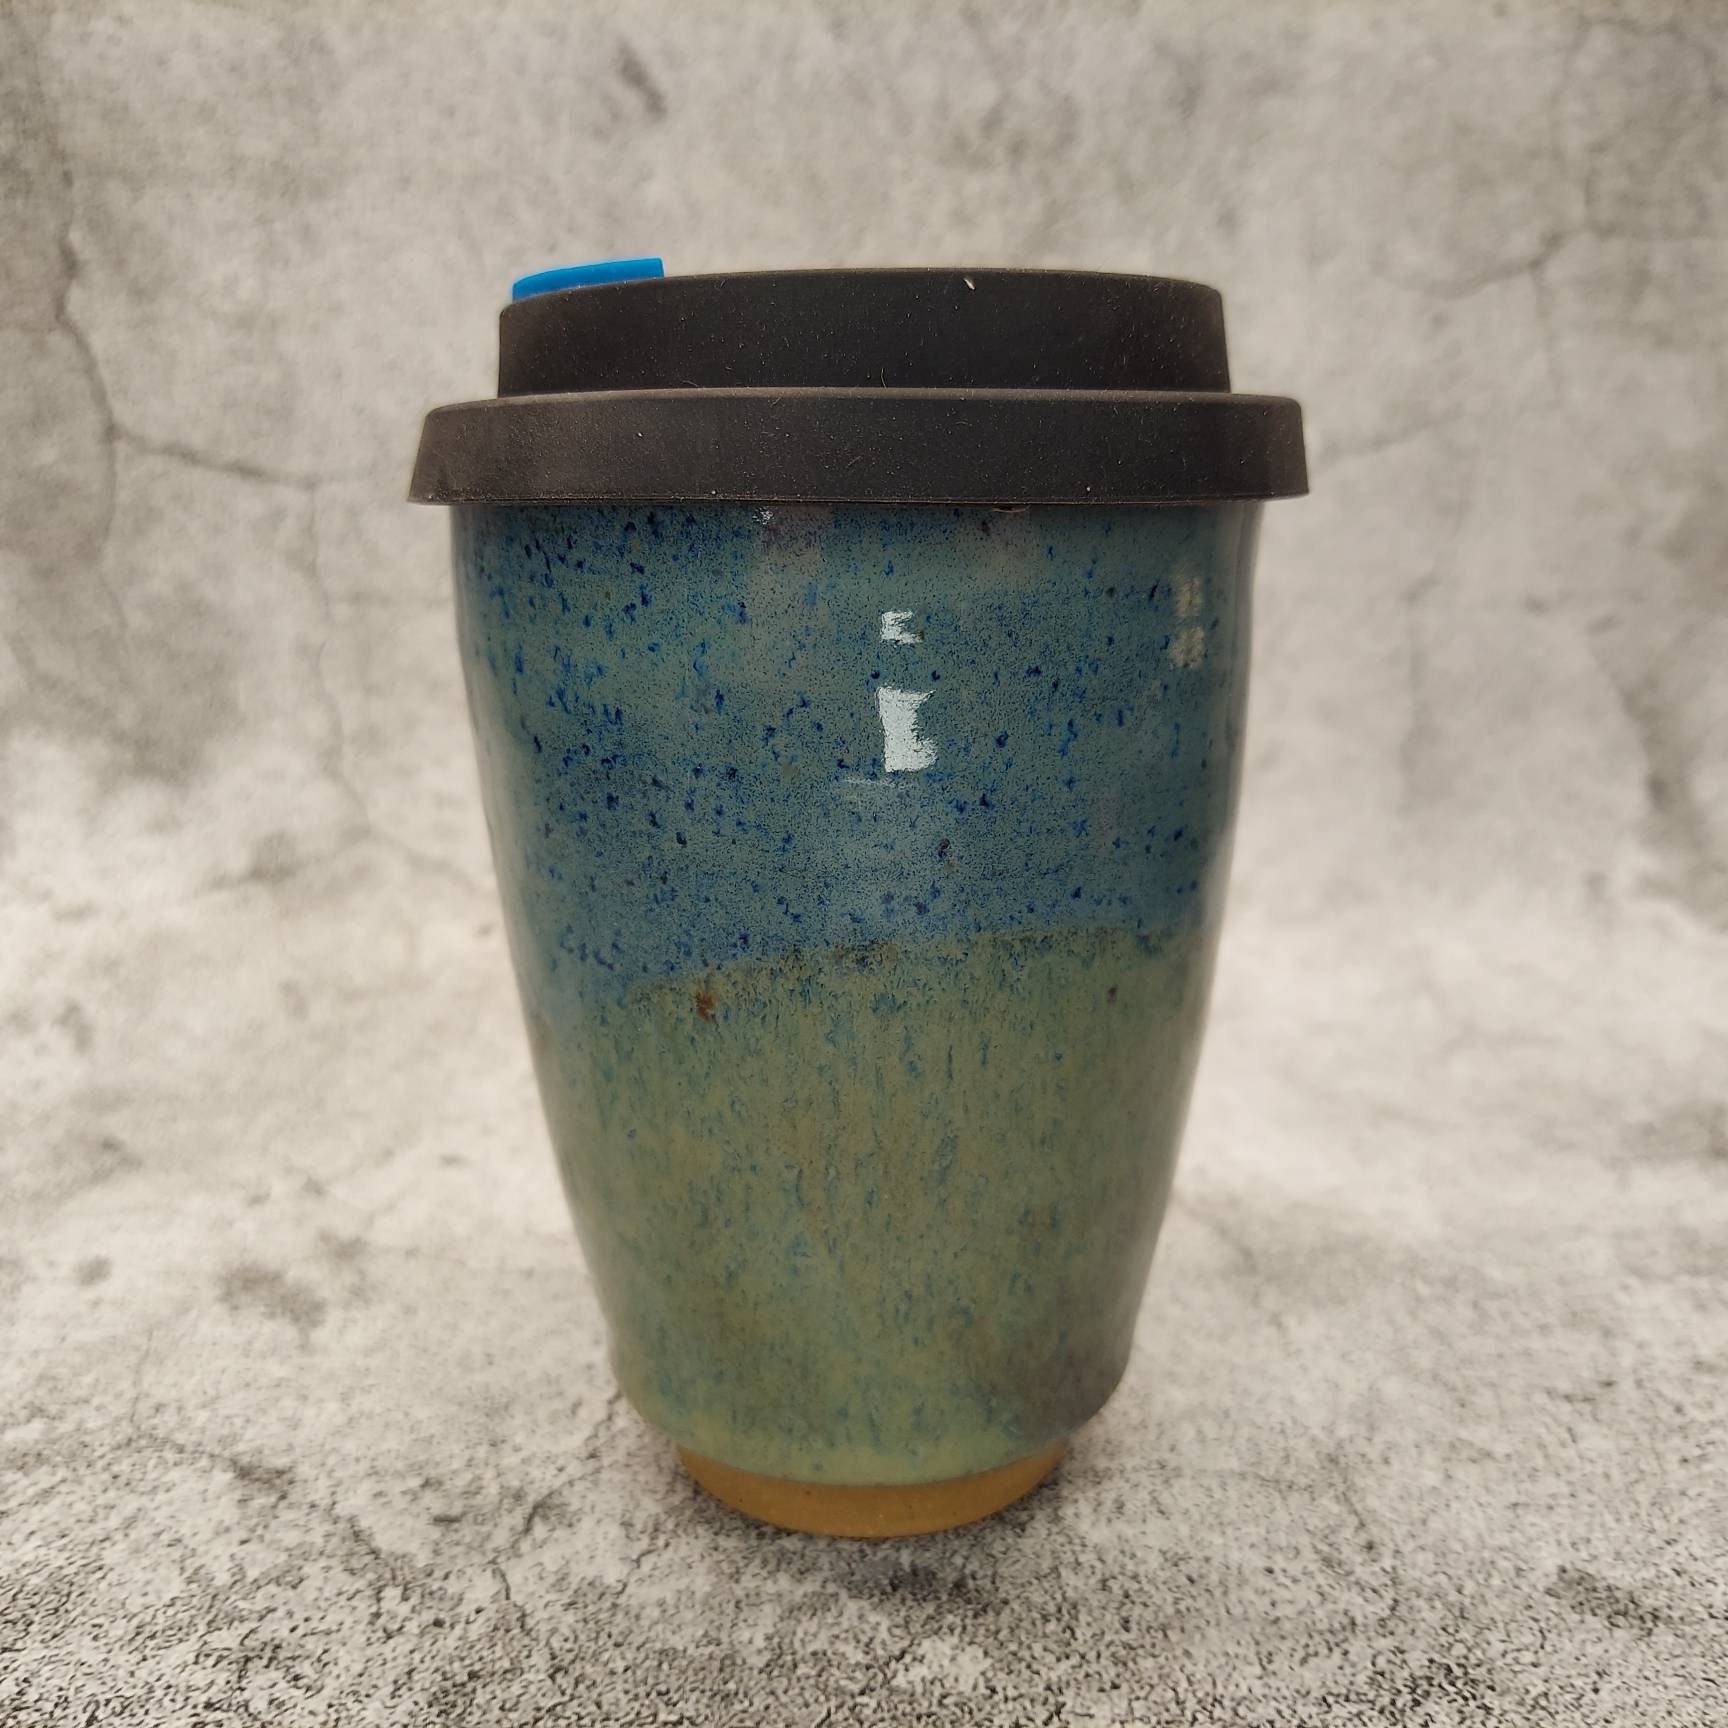 12 oz ceramic travel mug with lid